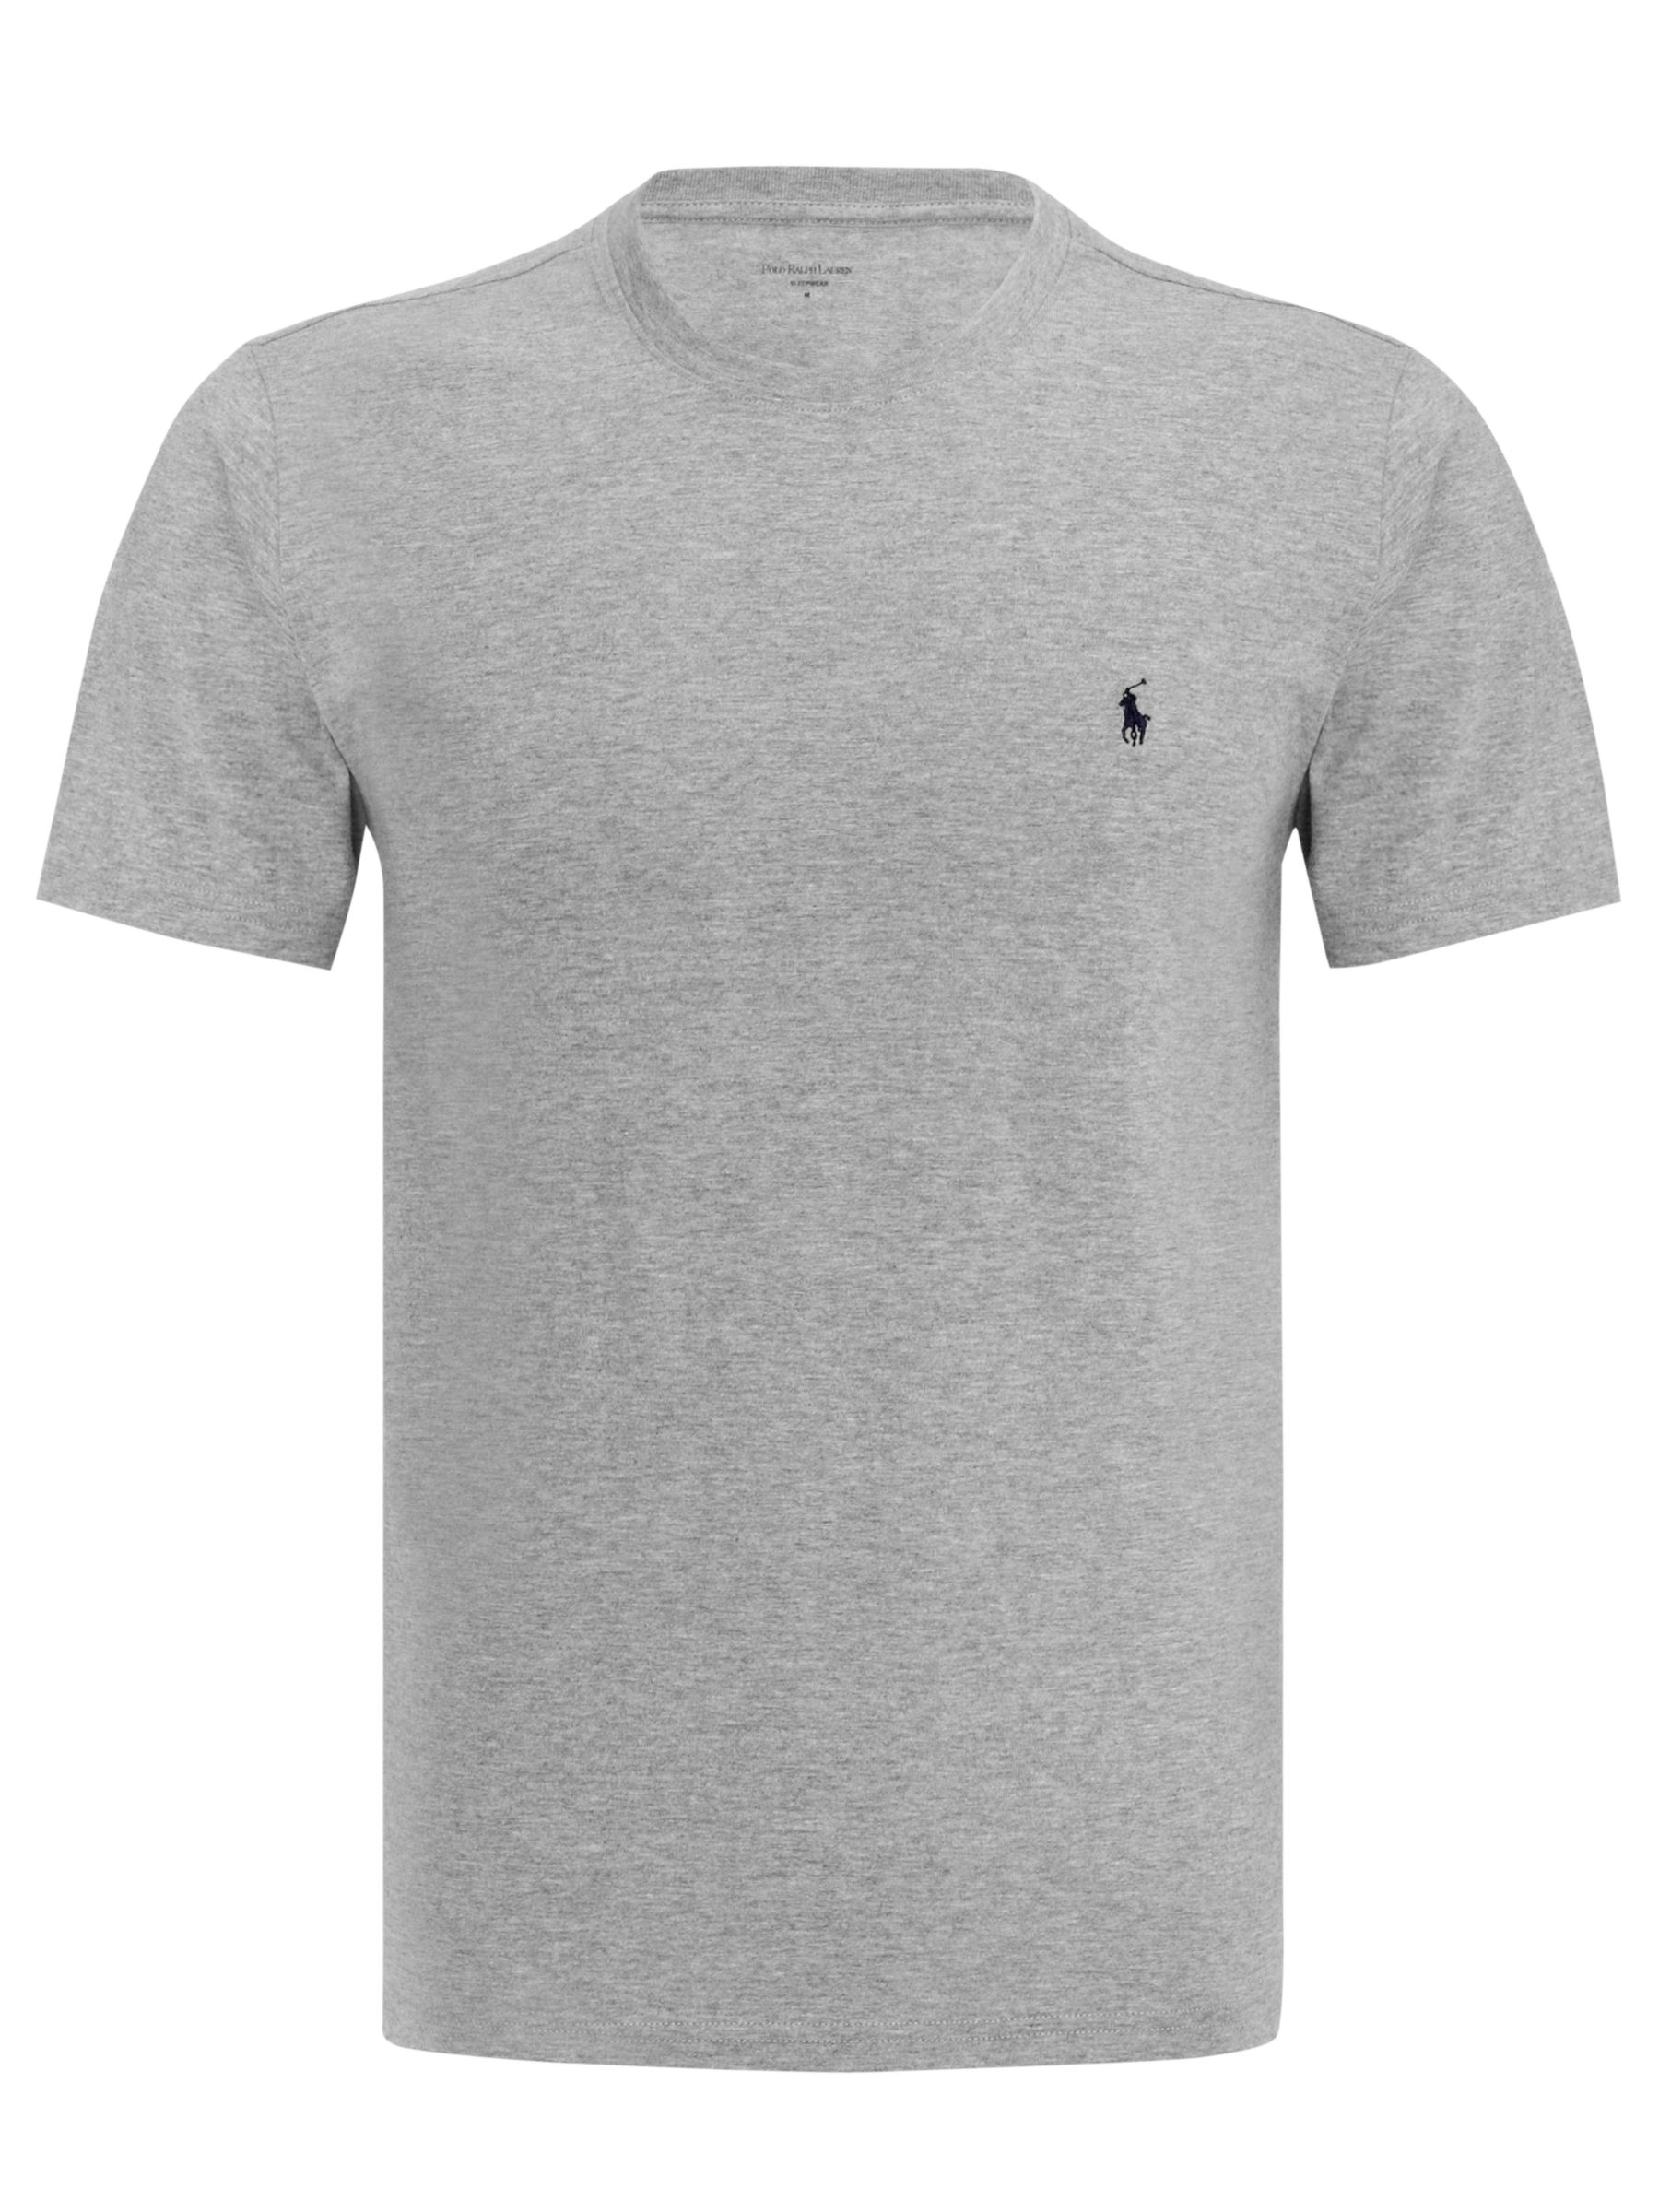 Crew Neck Lounge T-Shirt, Grey